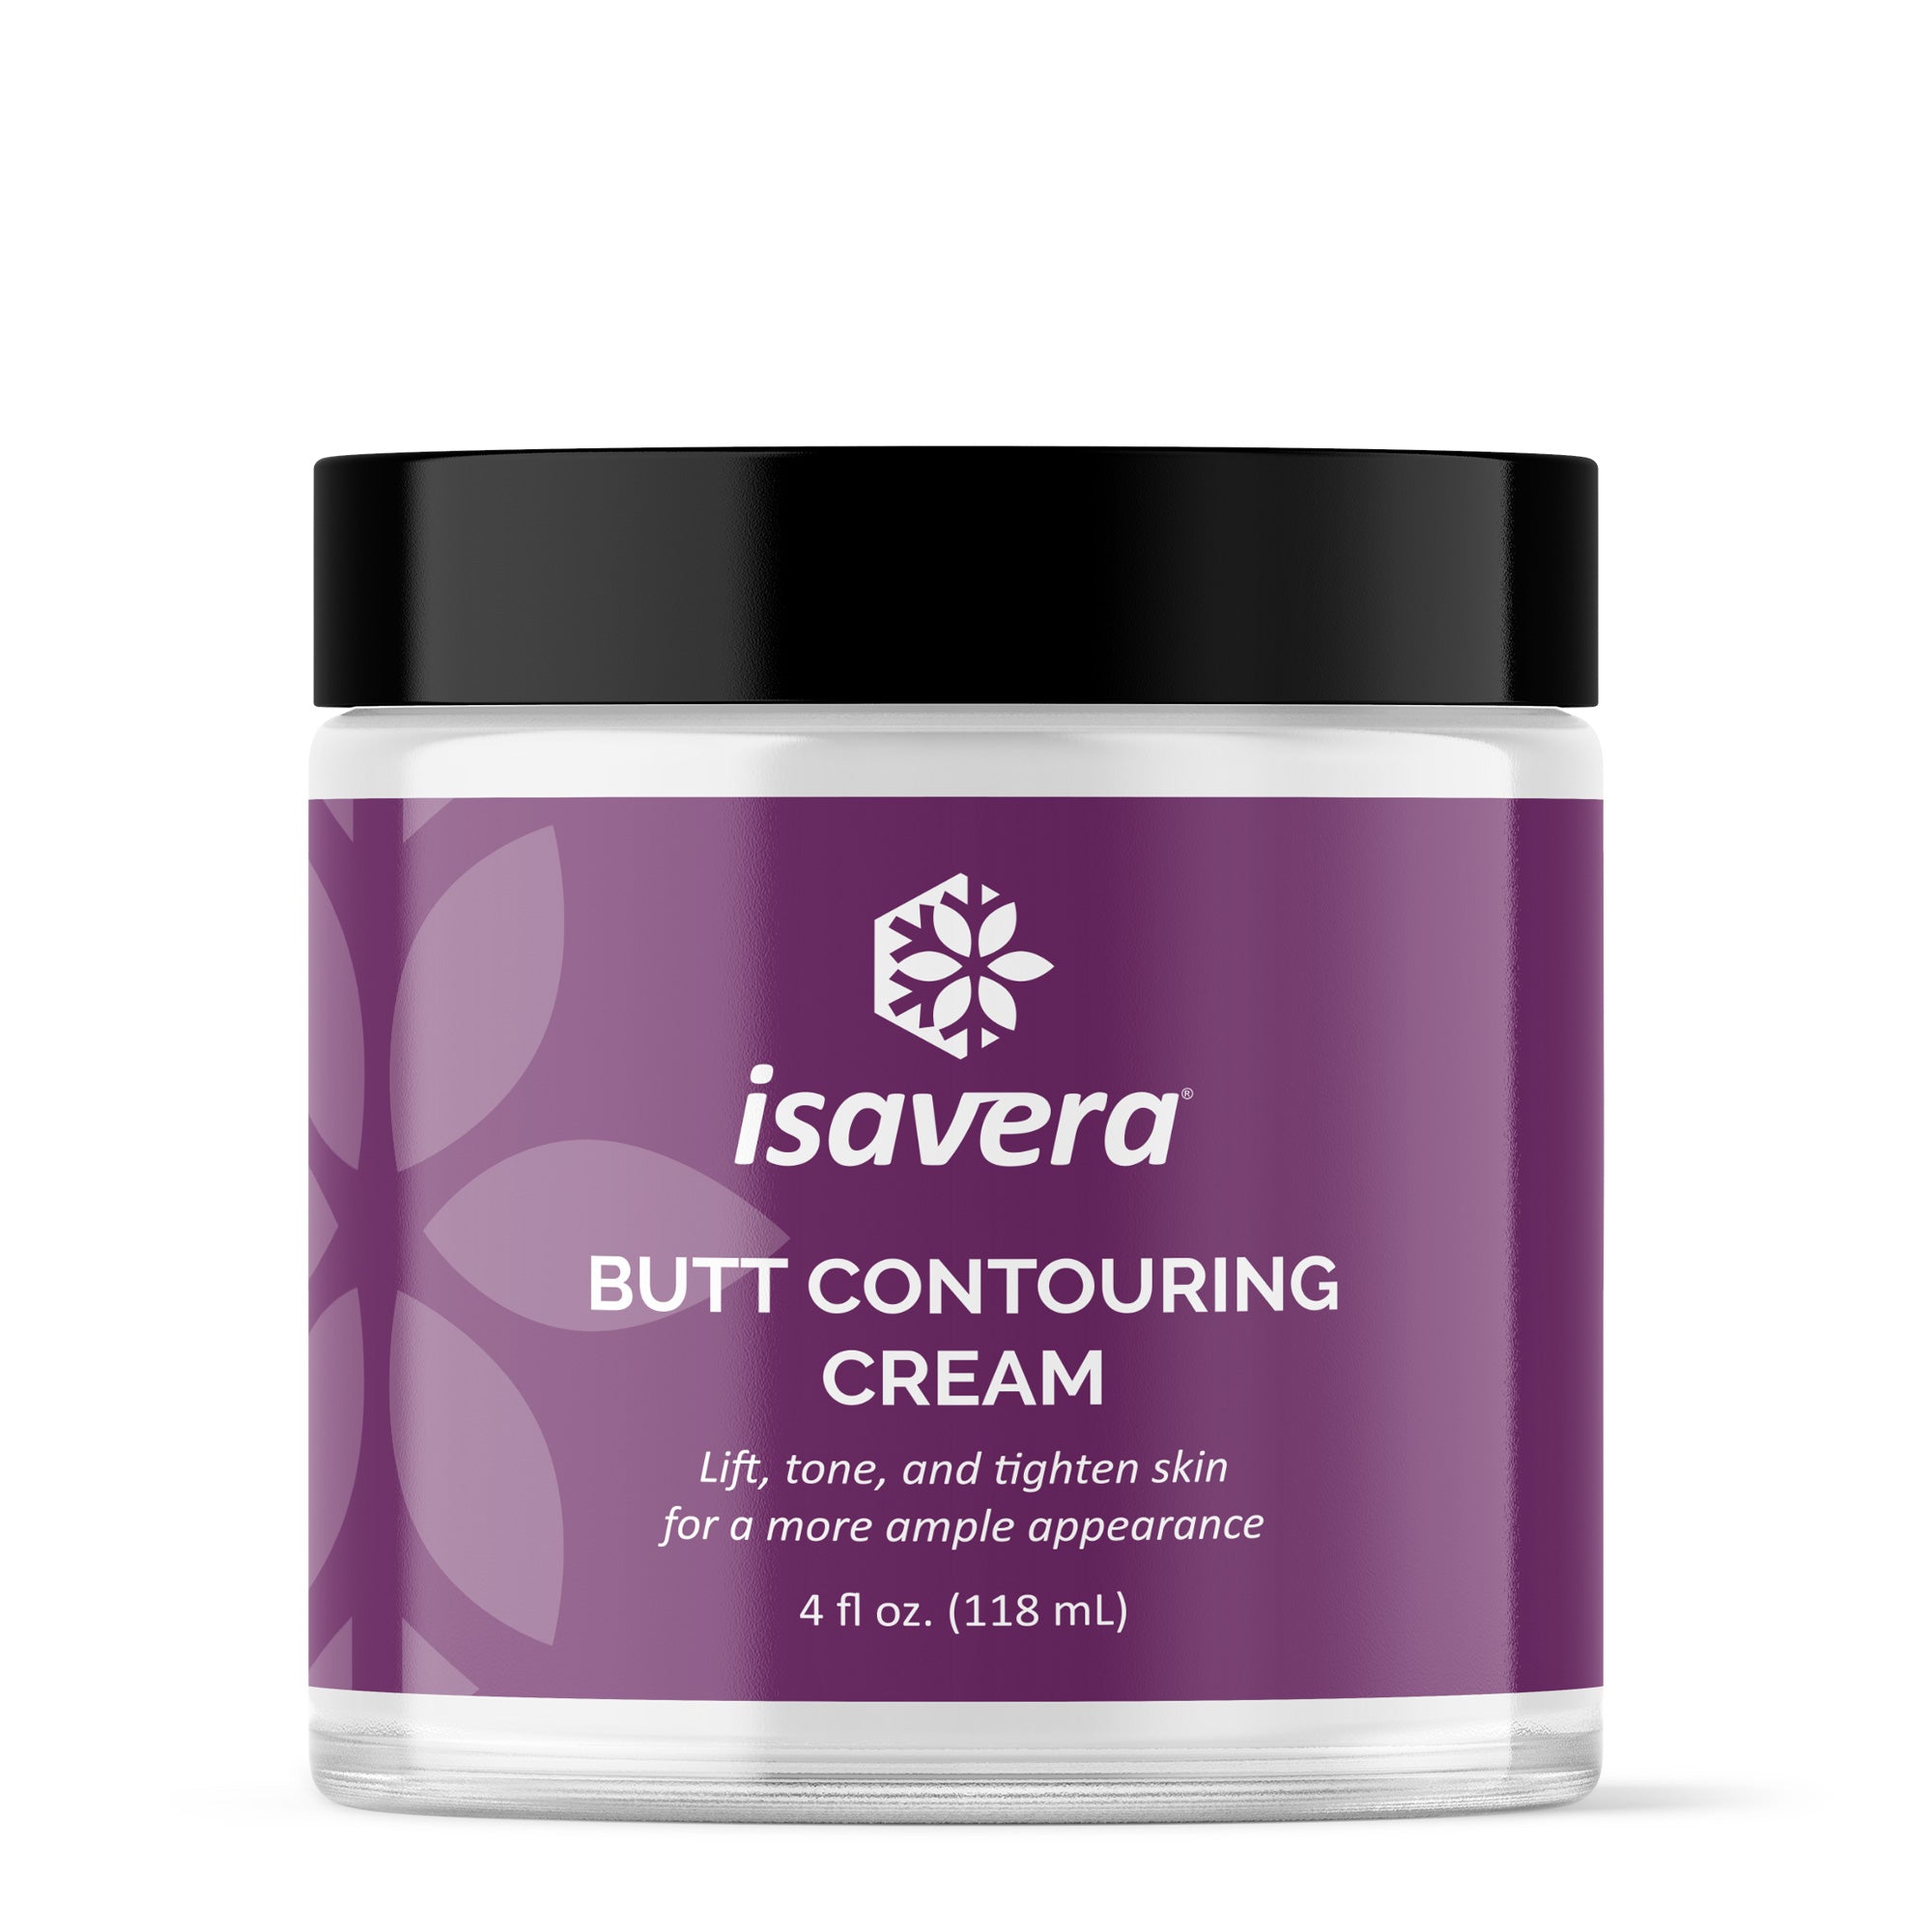 Isavera Butt Contouring Cream